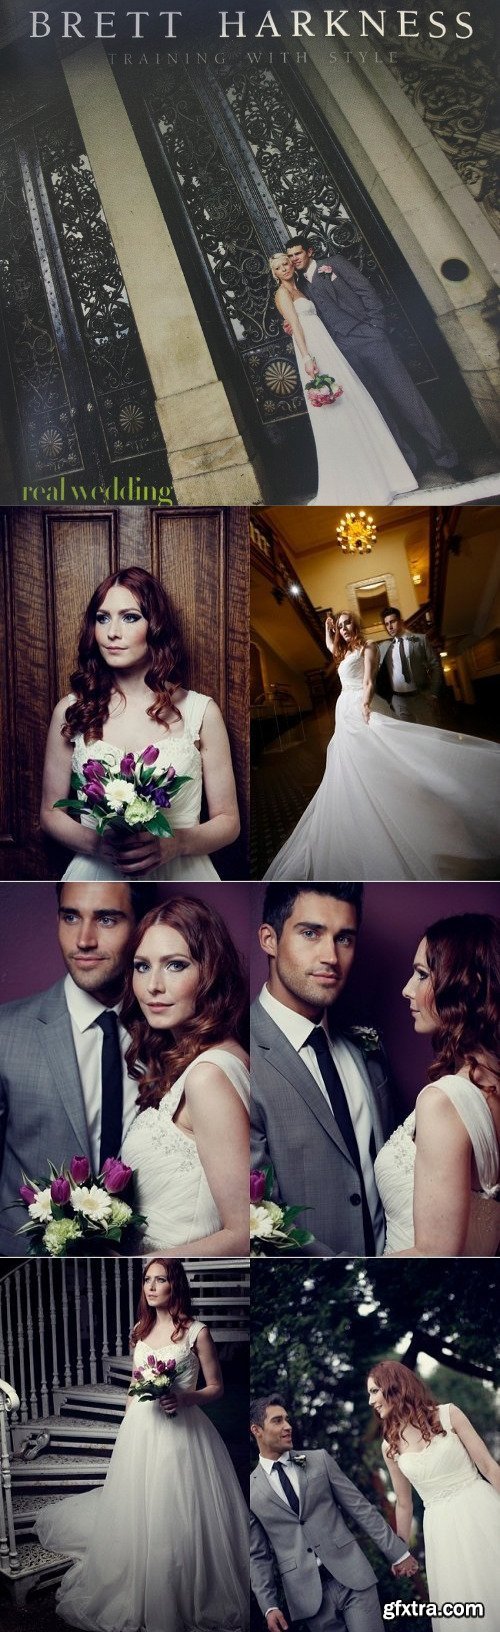 Brett Harkness - Real Life Wedding - Photography Tutorial